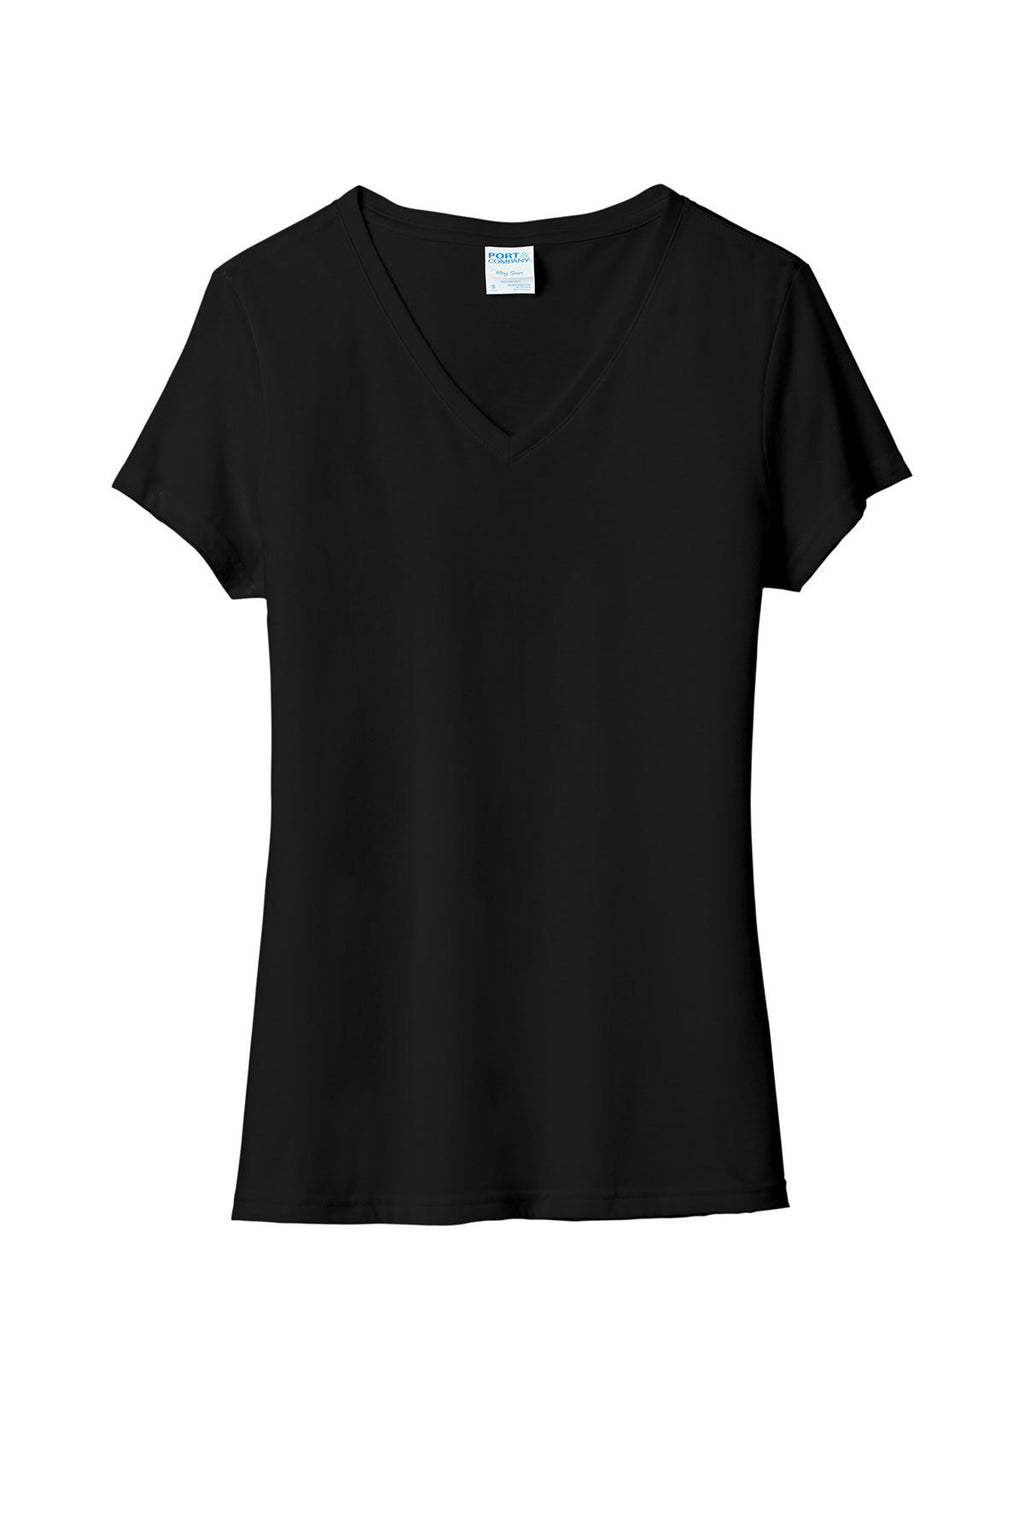 Port & Company Ladies V-Neck S/S Shirt Black